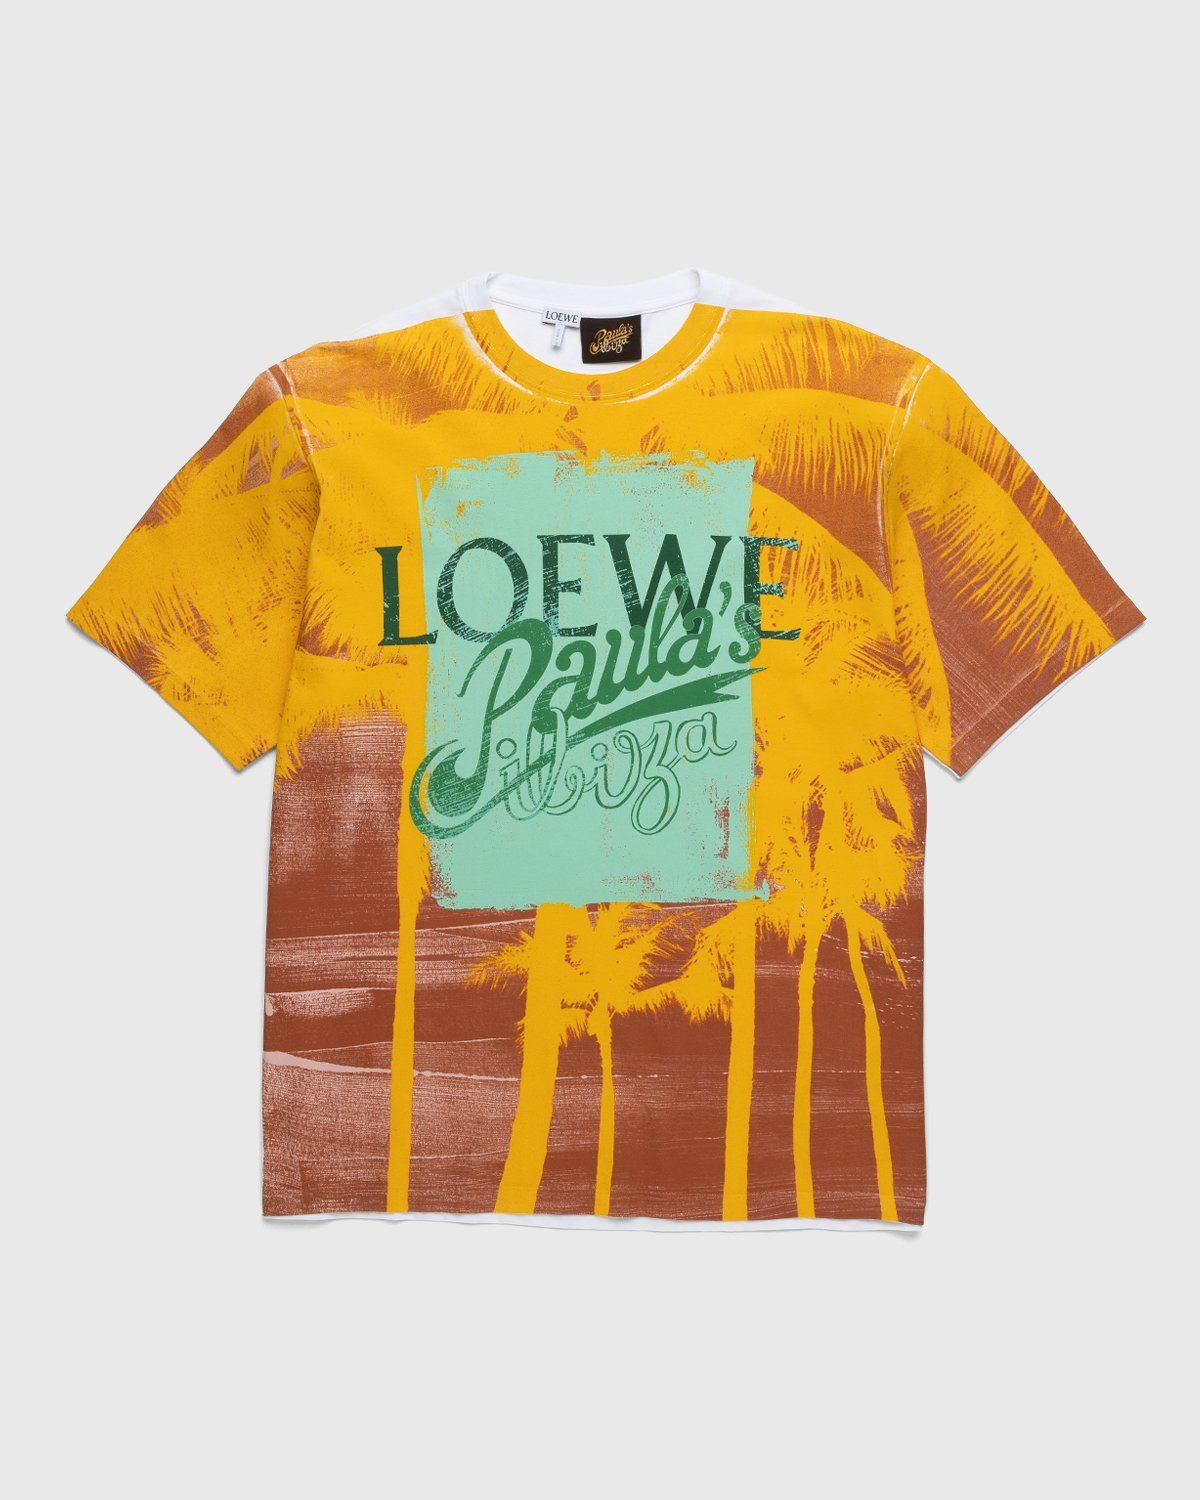 Loewe – Paula's Ibiza Palm Print T-Shirt White/Multi - T-shirts - Multi - Image 1